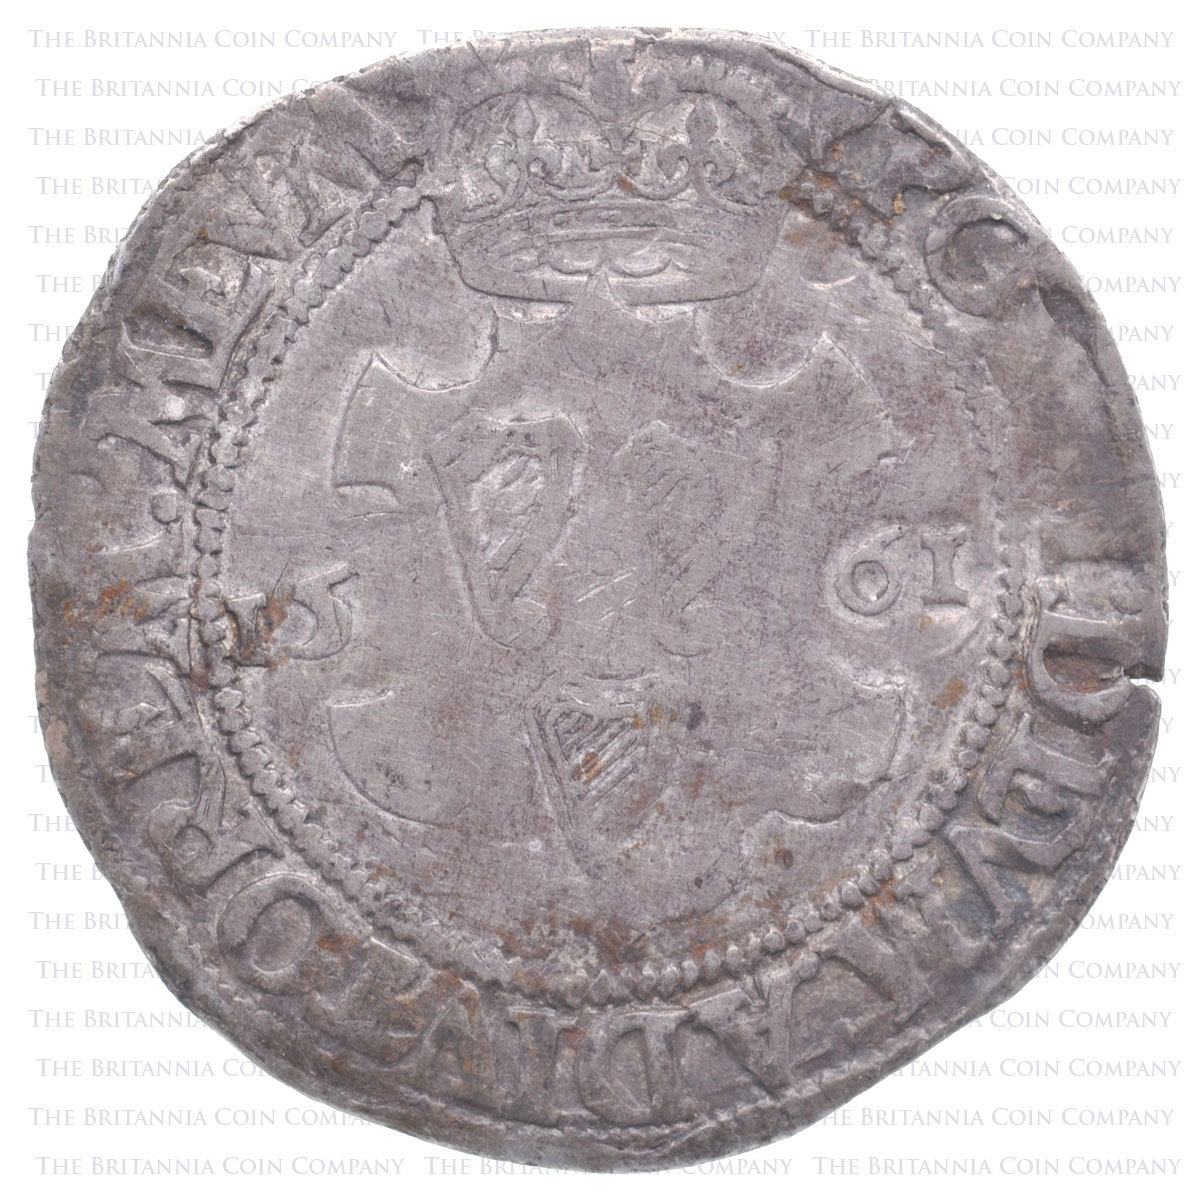 1561 IRELAND Elizabeth I Hammered Silver Shilling